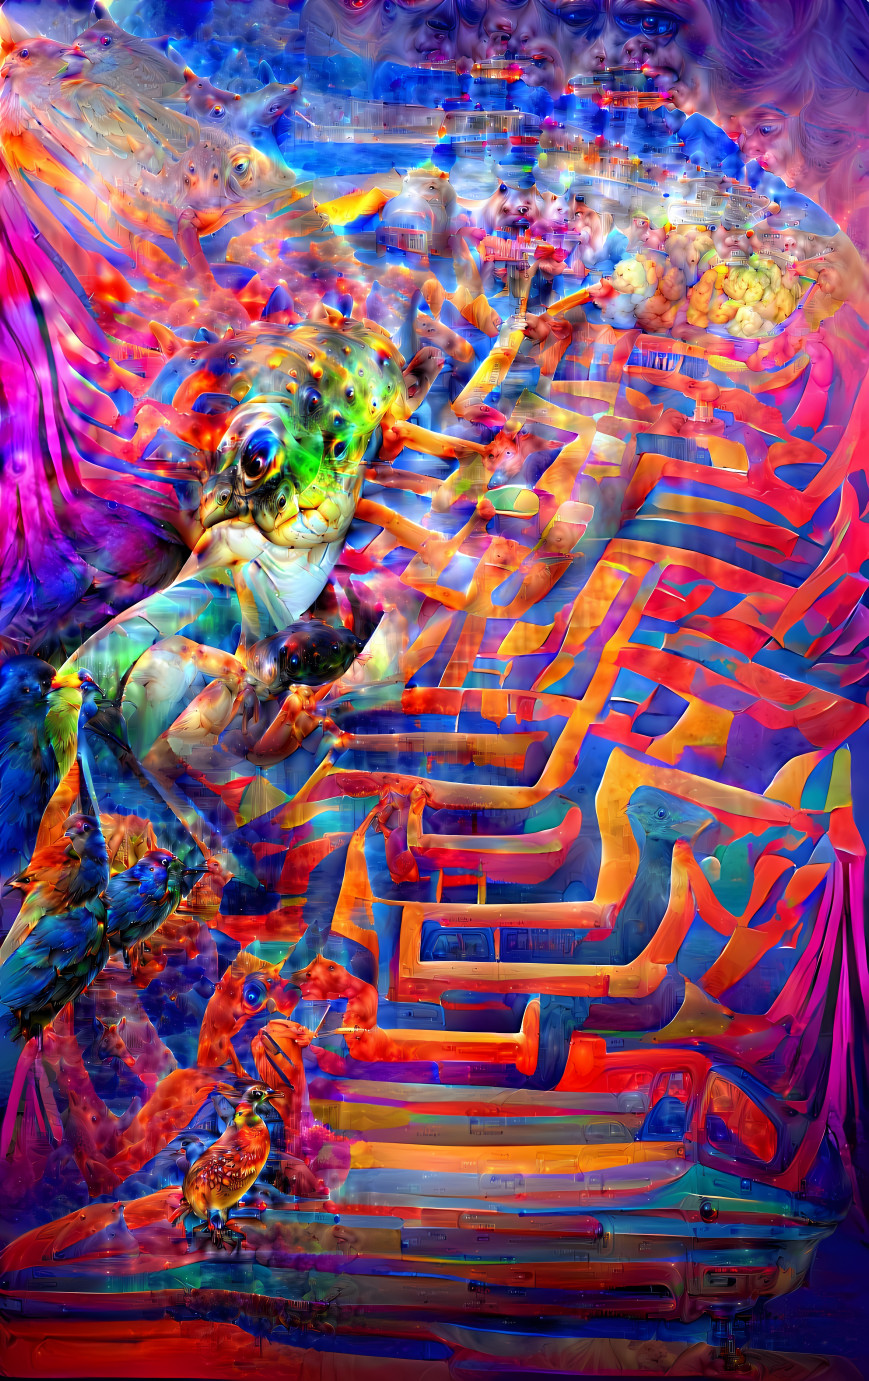 Animals in the maze